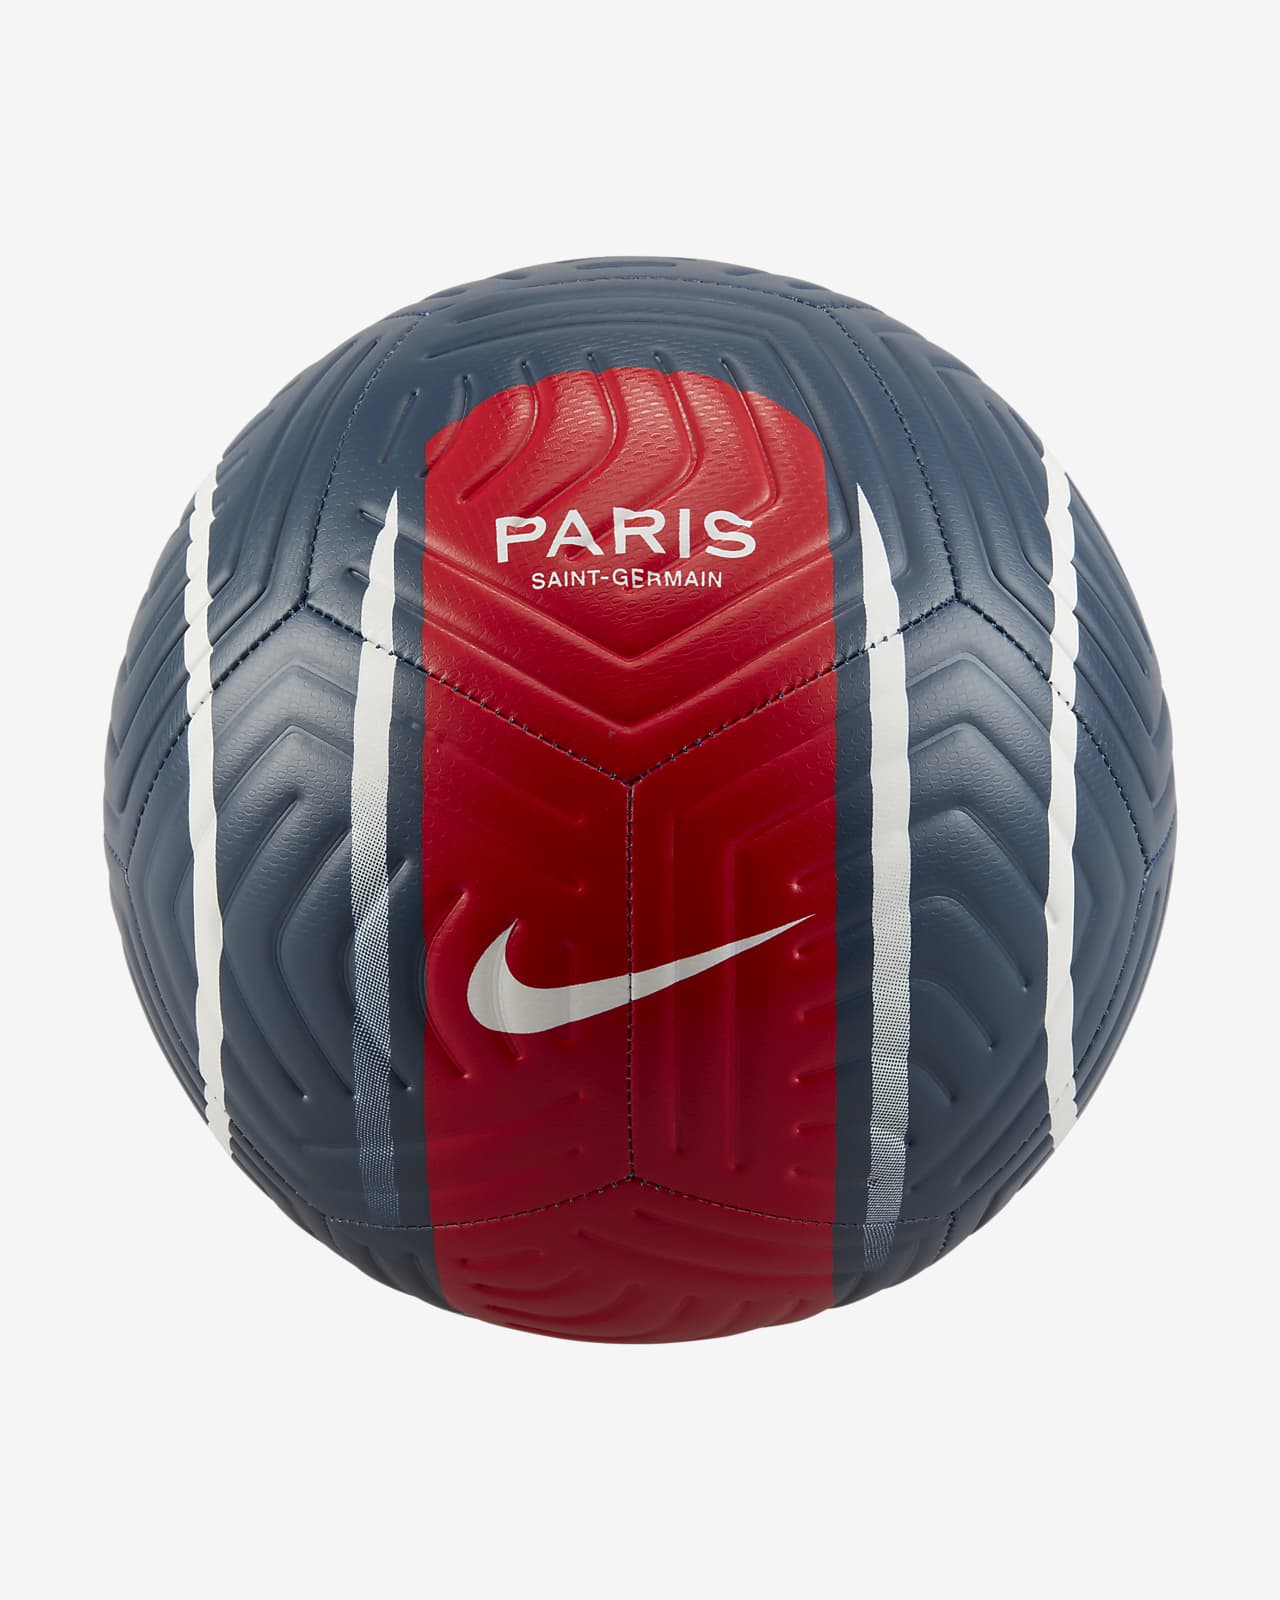 Como ballena azul Desconocido Balón de fútbol del Paris Saint-Germain Strike. Nike.com